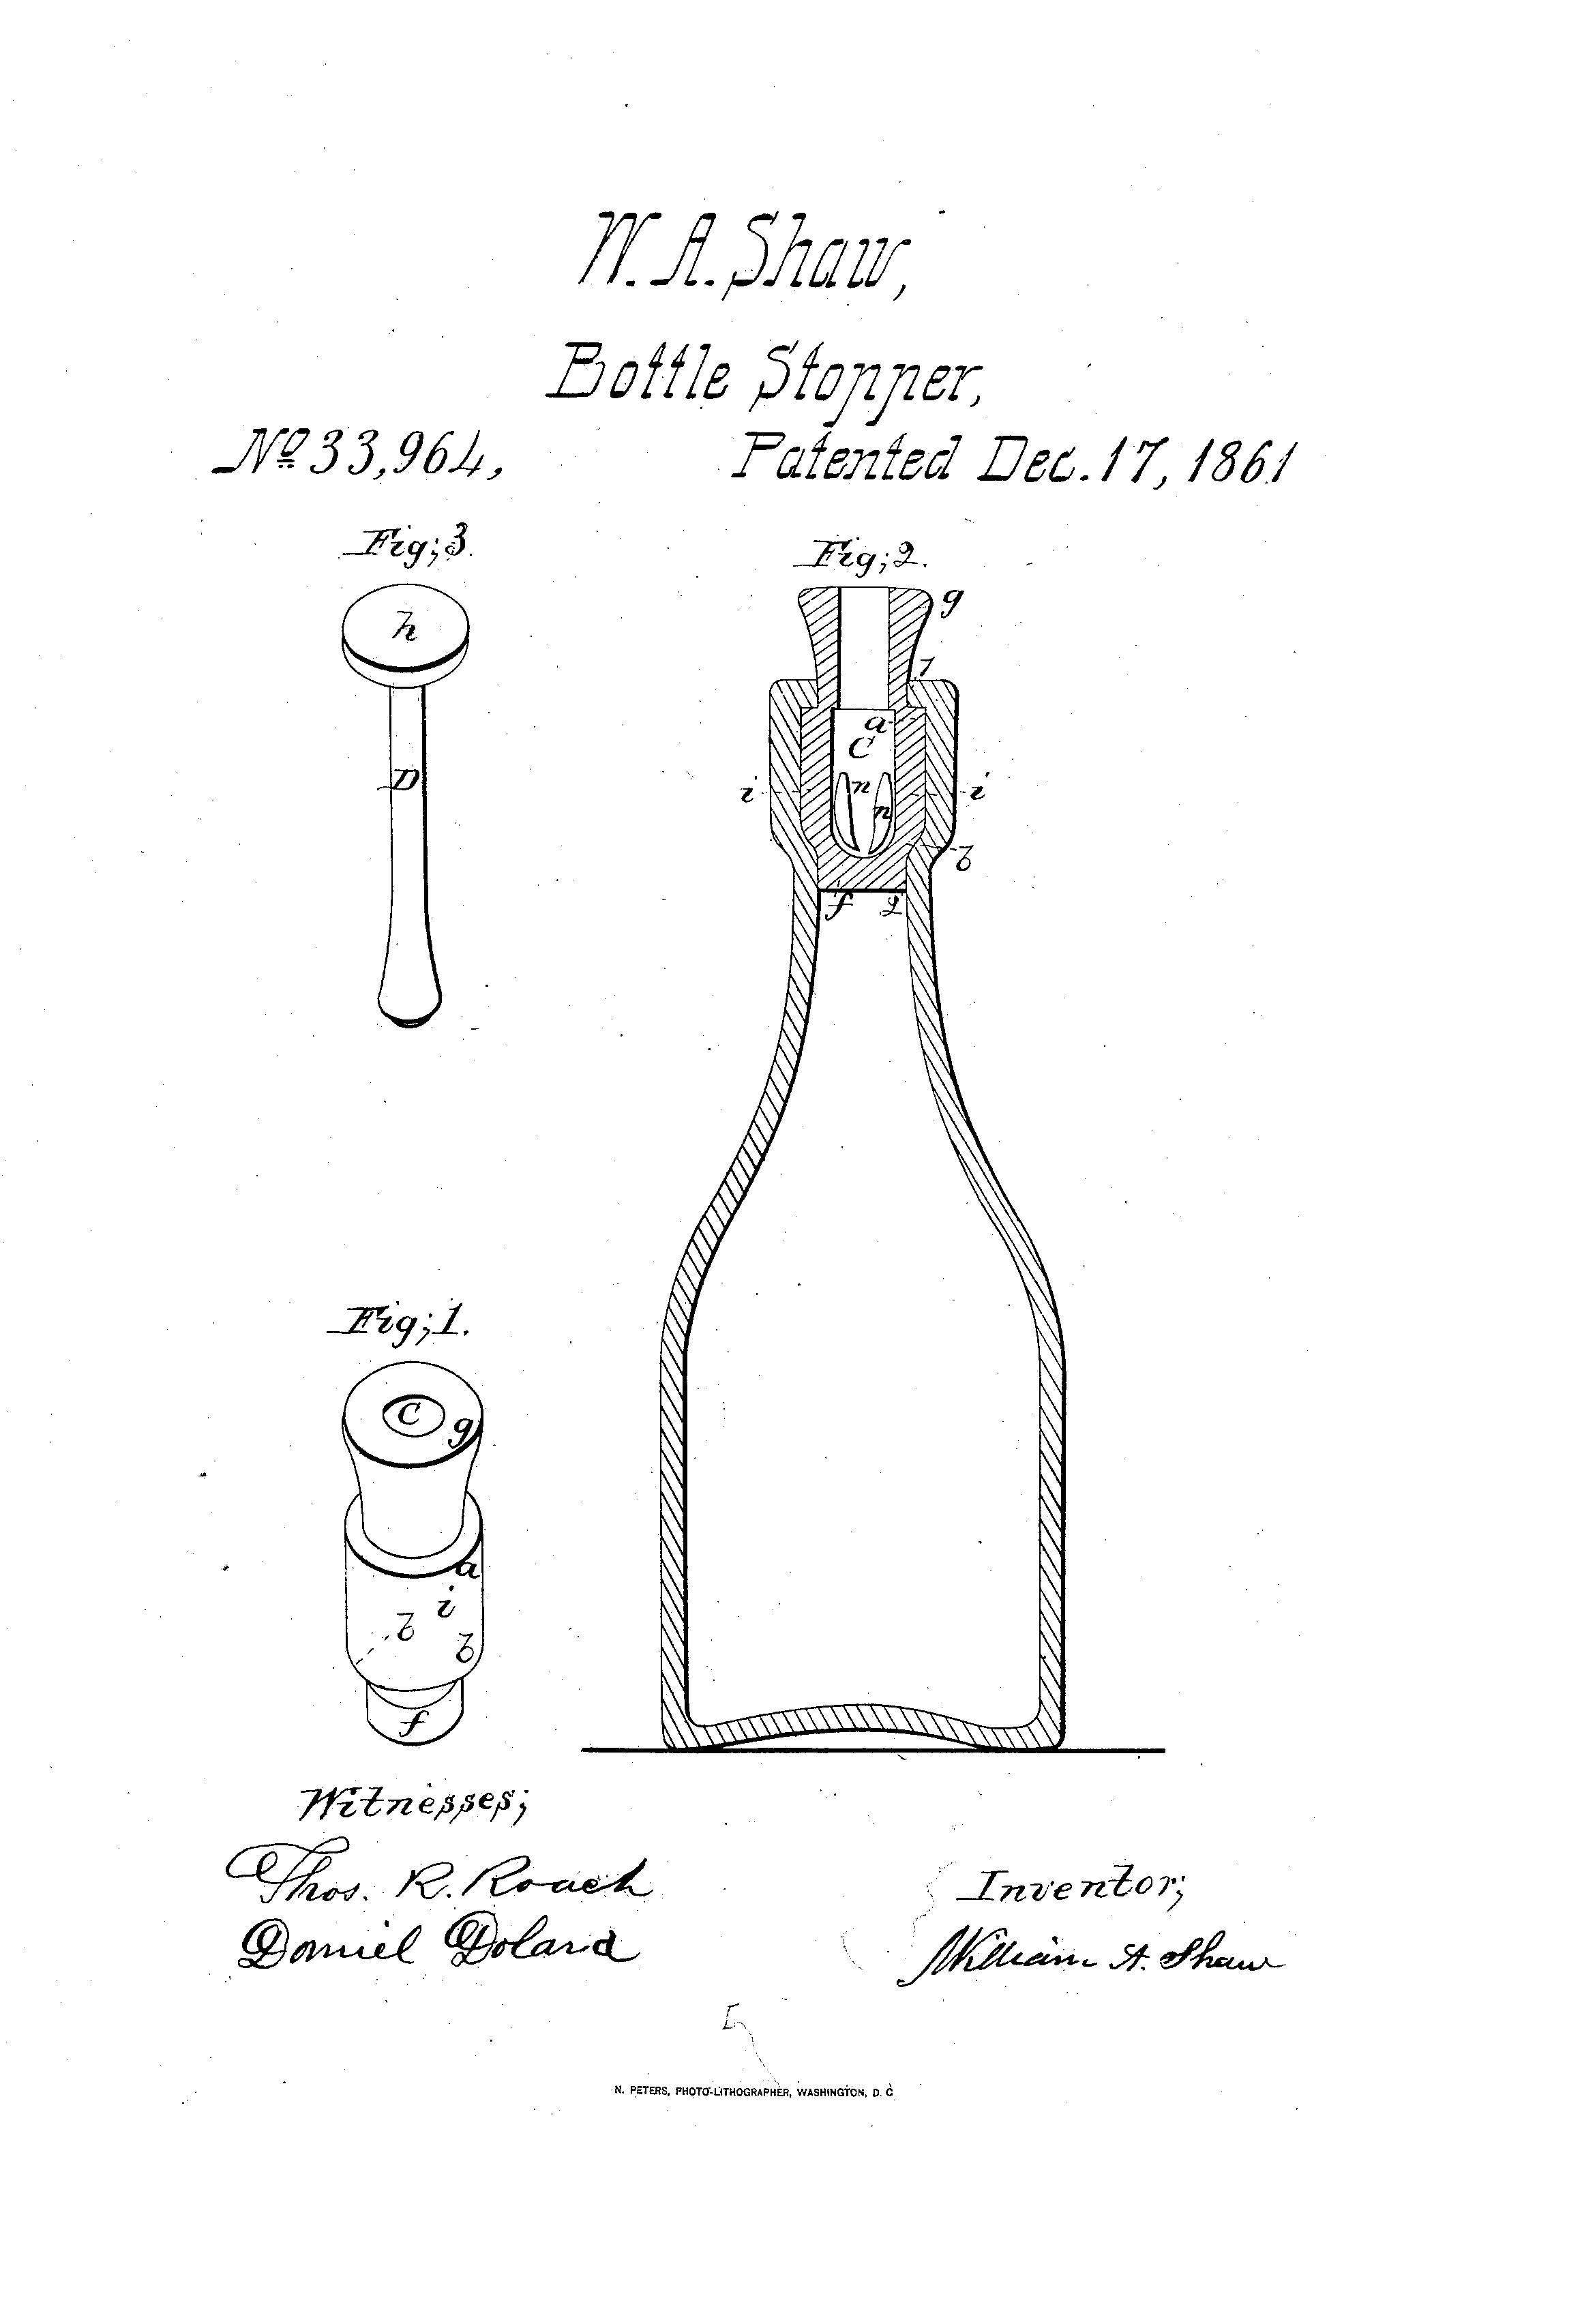 Patent 33,964